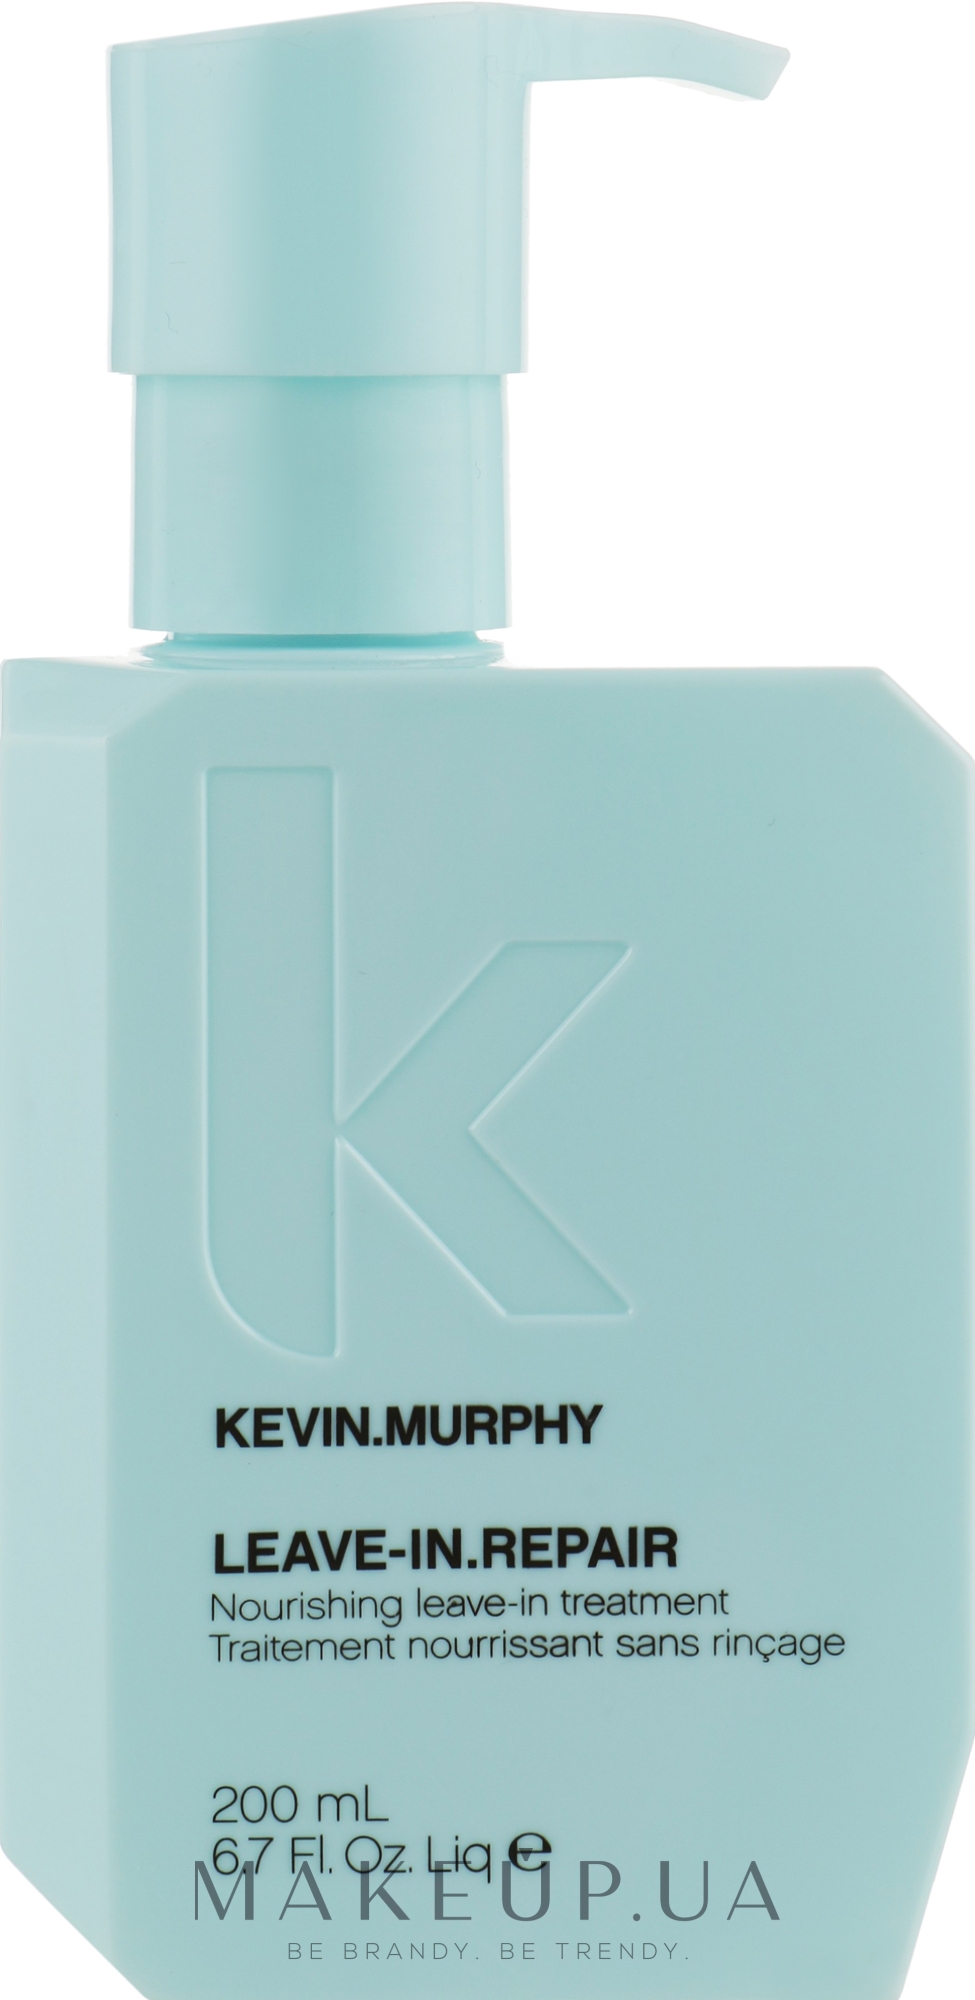 Питательный несмываемый кондиционер для волос - Kevin.Murphy Leave-In.Repair Nourishing Leave-In Treatment — фото 200ml